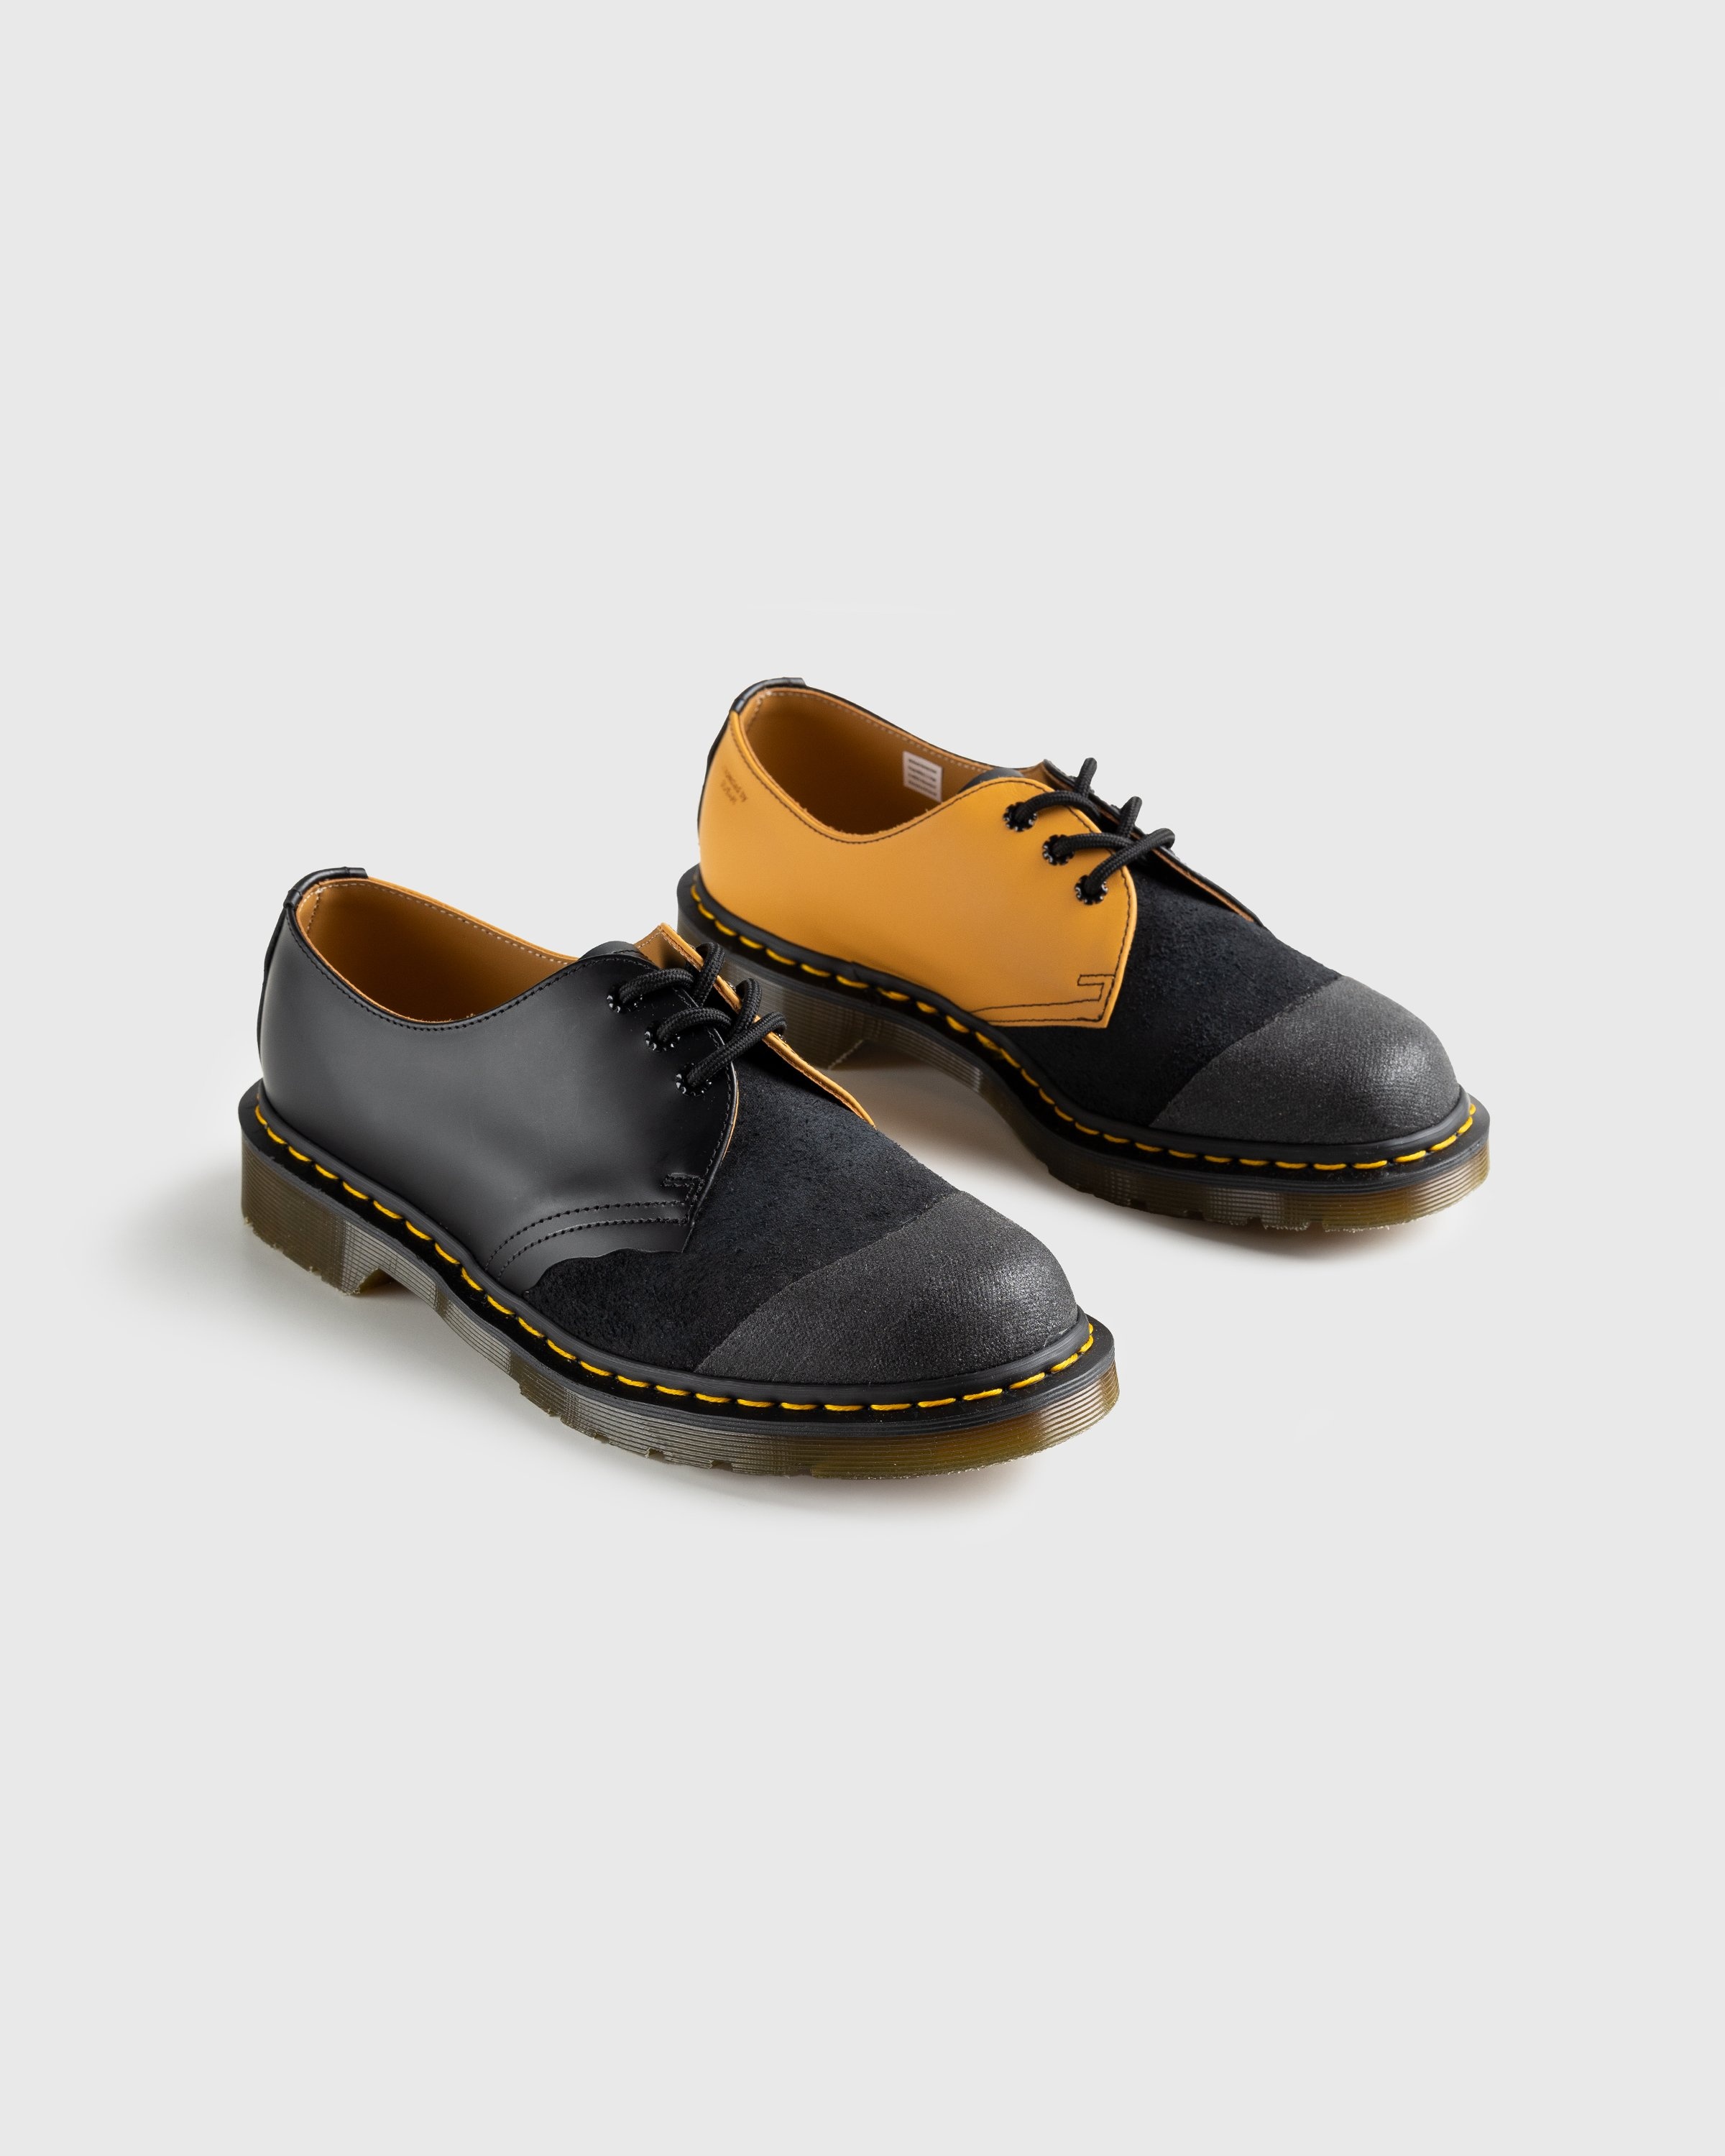 Dr. Martens – 1461 Reverse Black+Tan Smooth+Nappa - Shoes - Black - Image 3